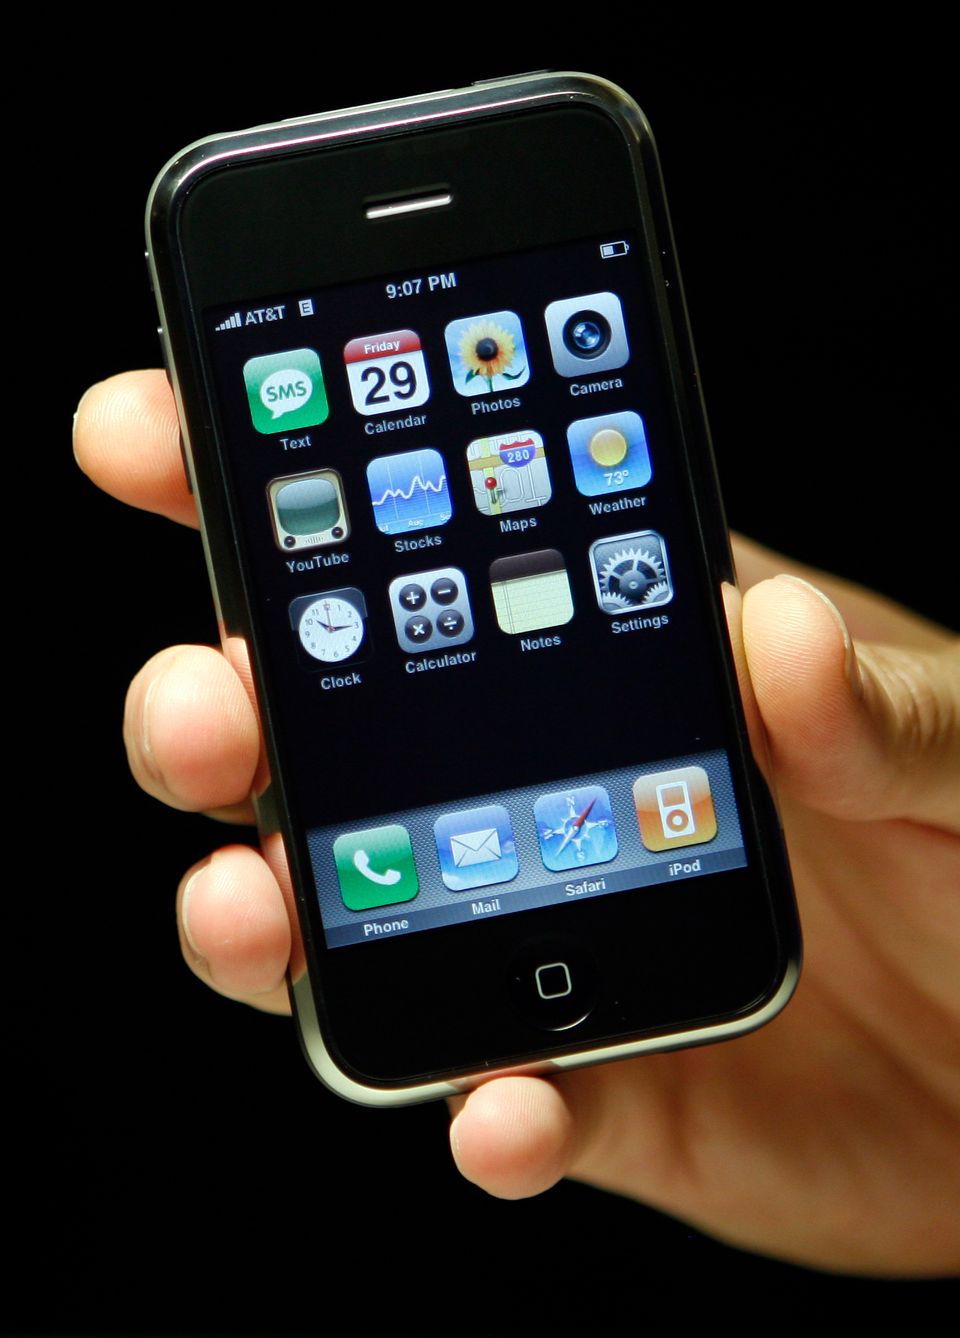 iPhone 1 - November 2007